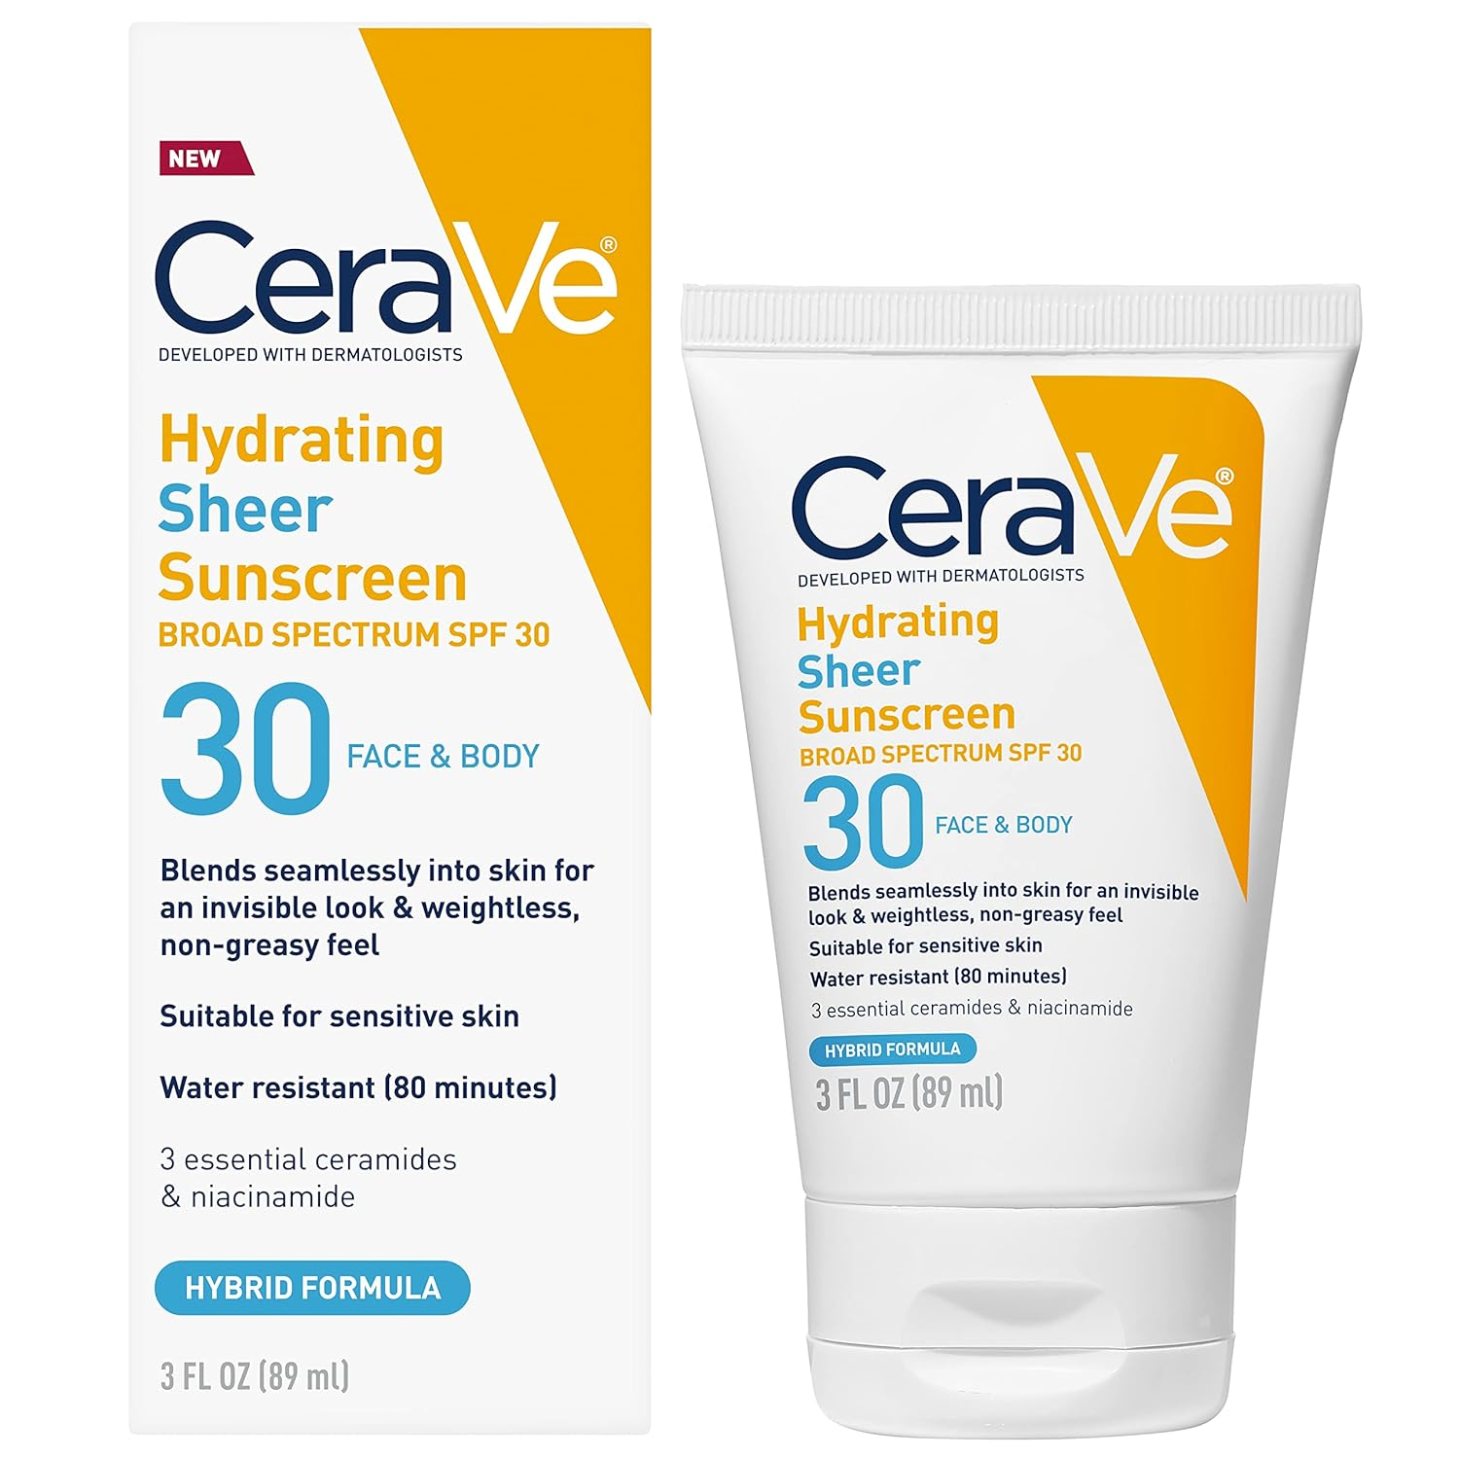 CeraVe Hydrating Sheer Sunscreen SPF 30